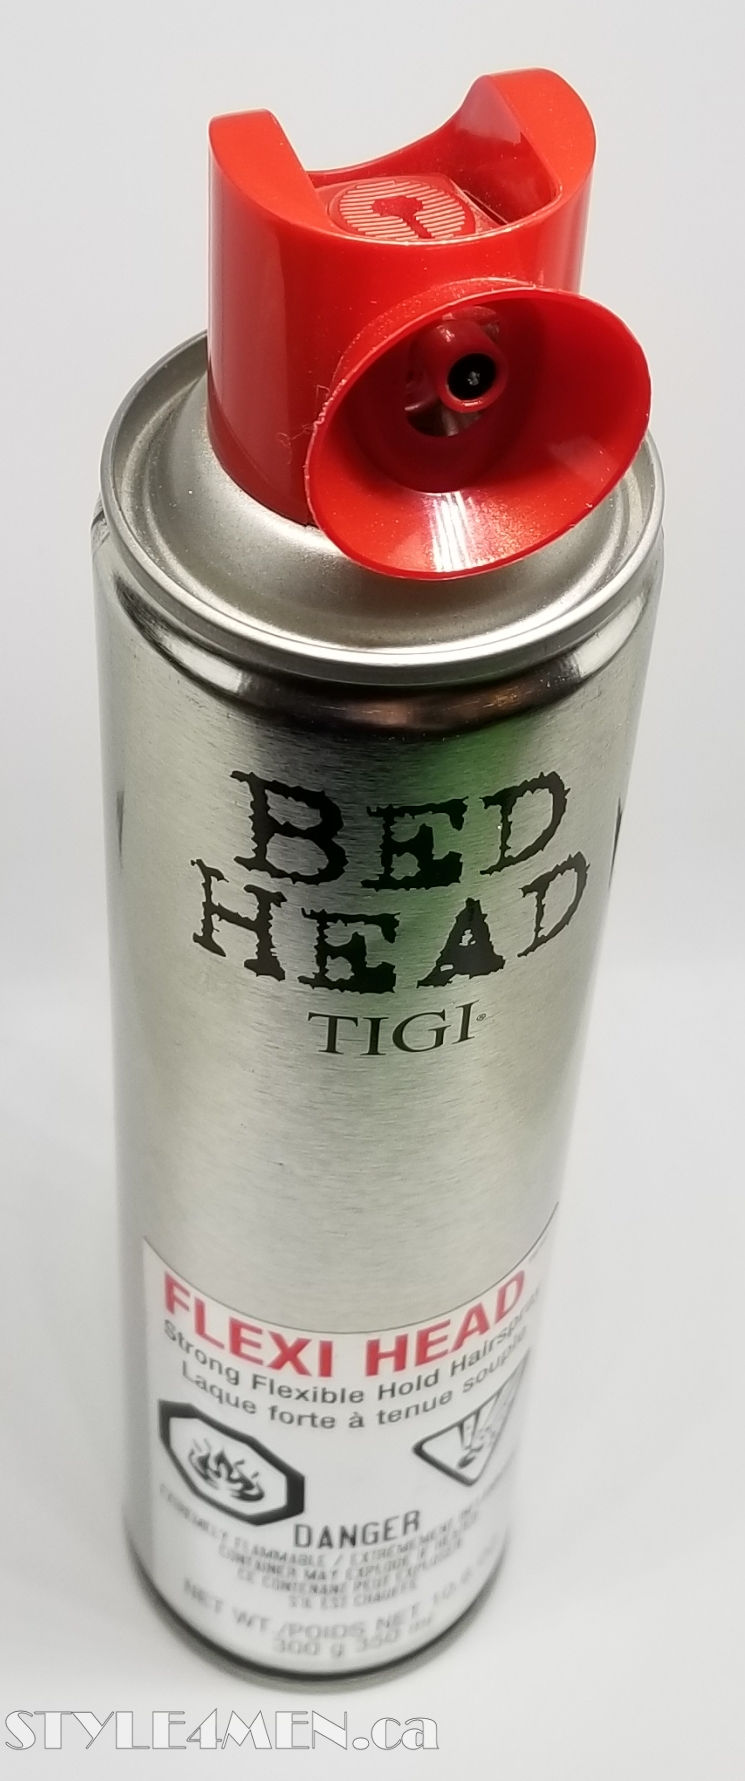 BEDHEAD Flexi Head Hairspray – Cool but expensive